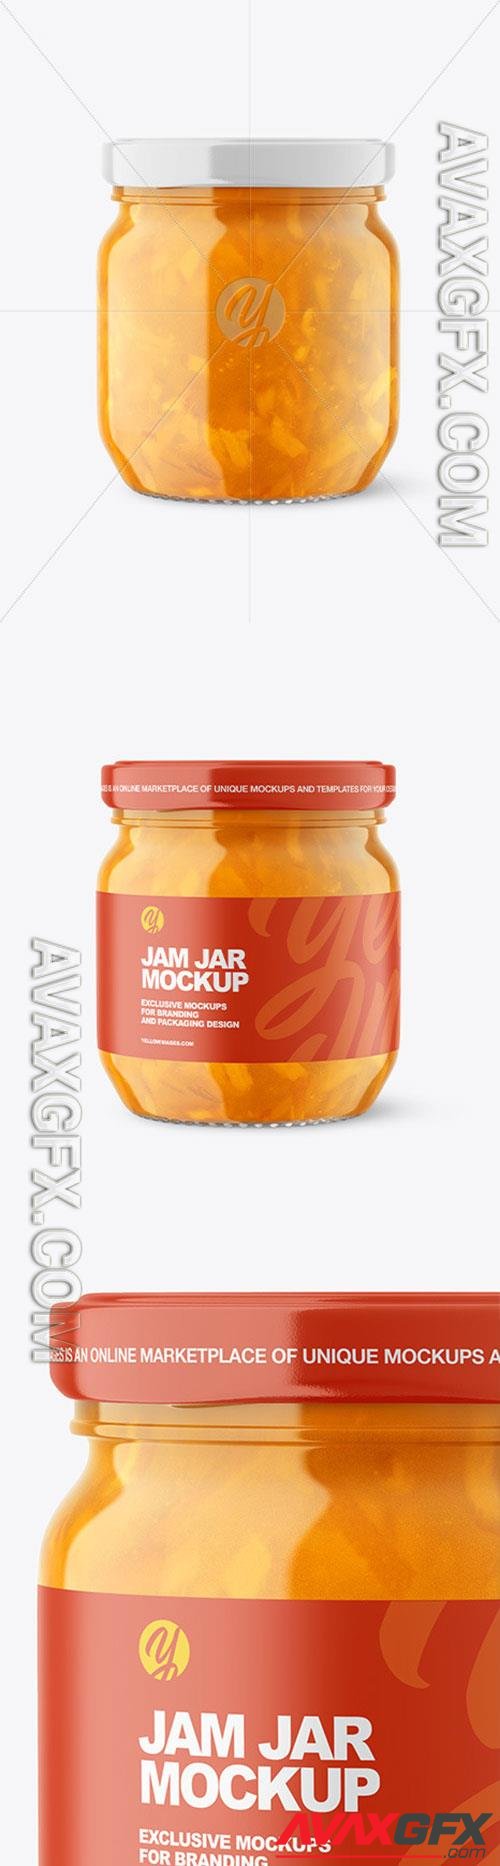 Glass Jar with Orange Jam Mockup 86569 TIF